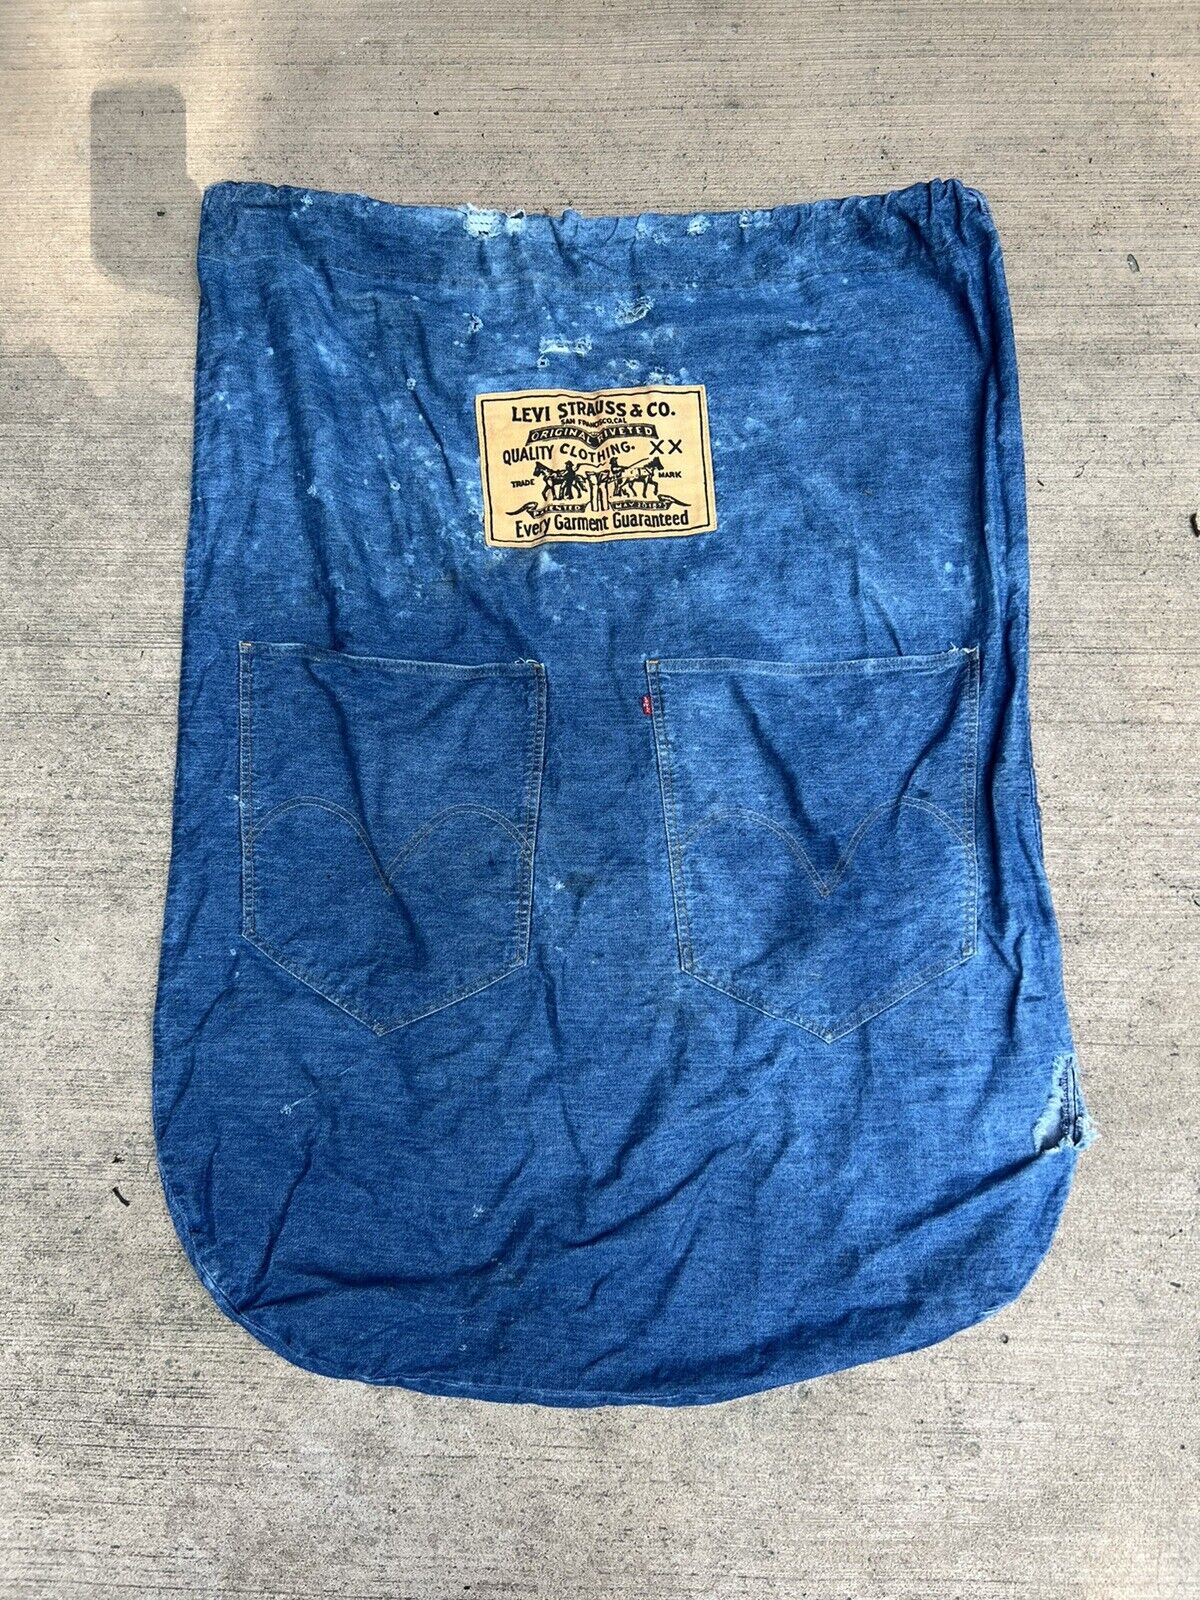 Vintage Levi’s Denim Laundry Bag 1970’s Distressed Workwear